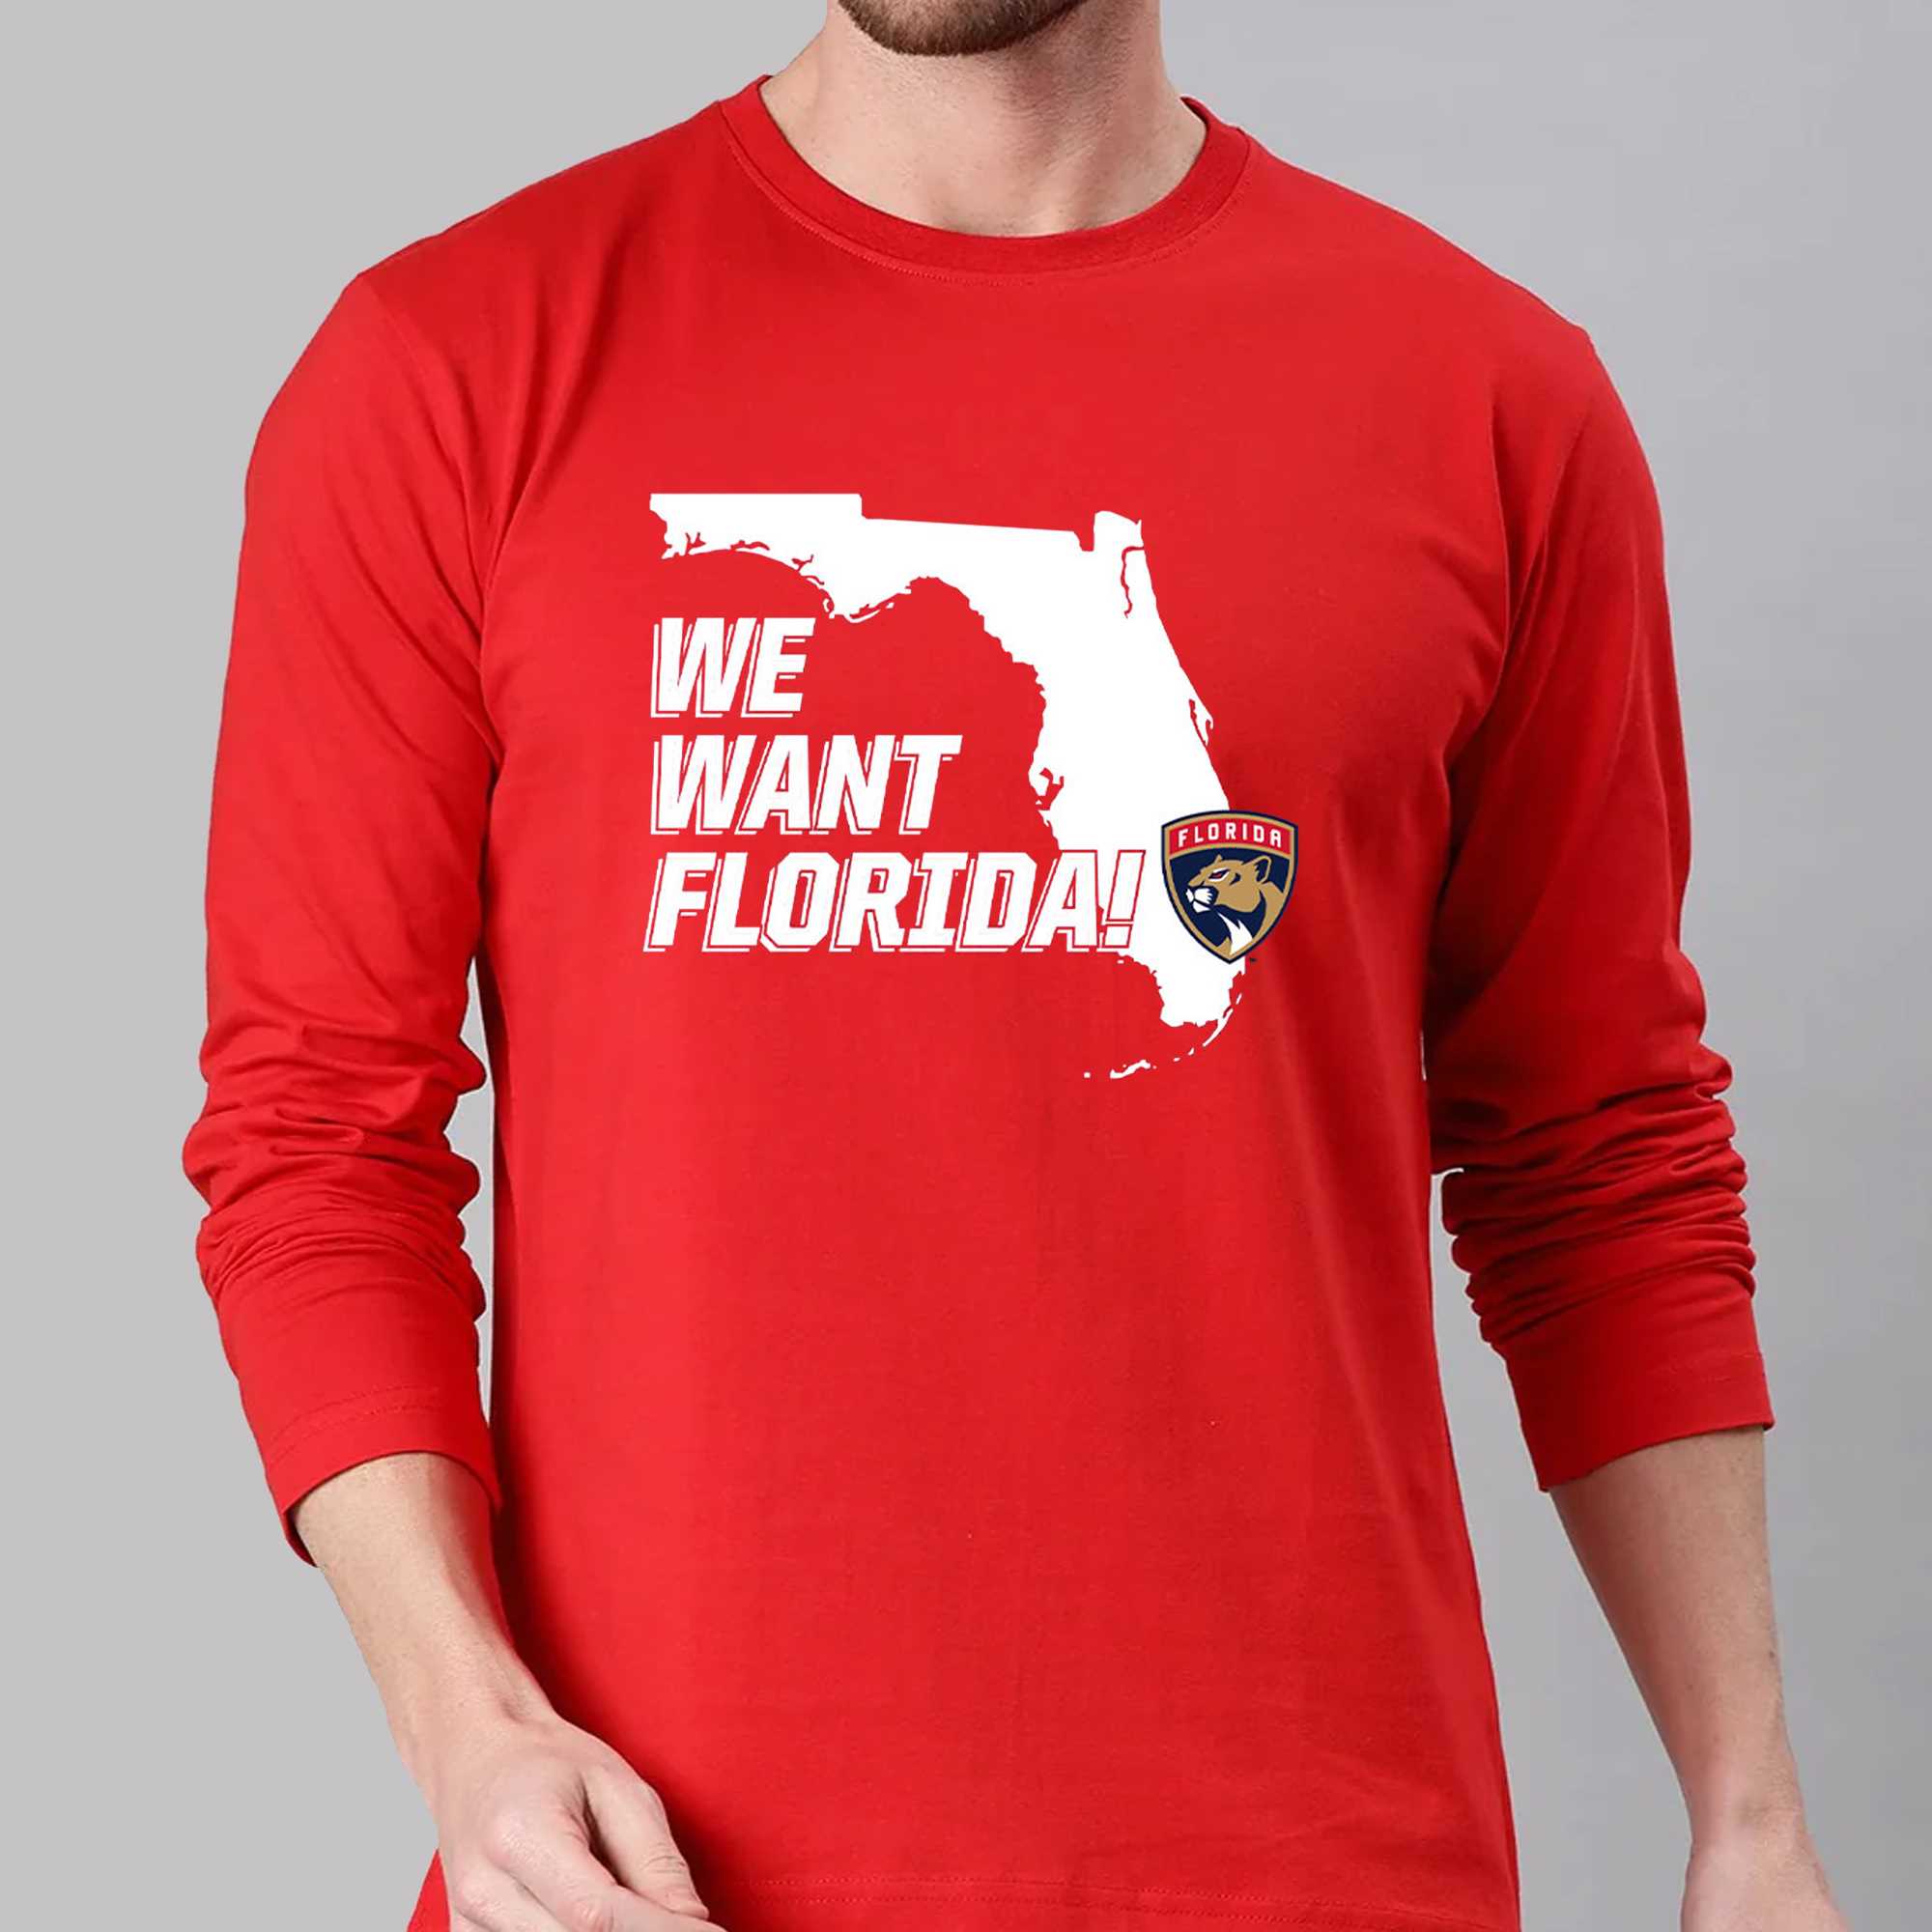 Florida Panthers T-Shirts, Panthers Shirts, Panthers Tees